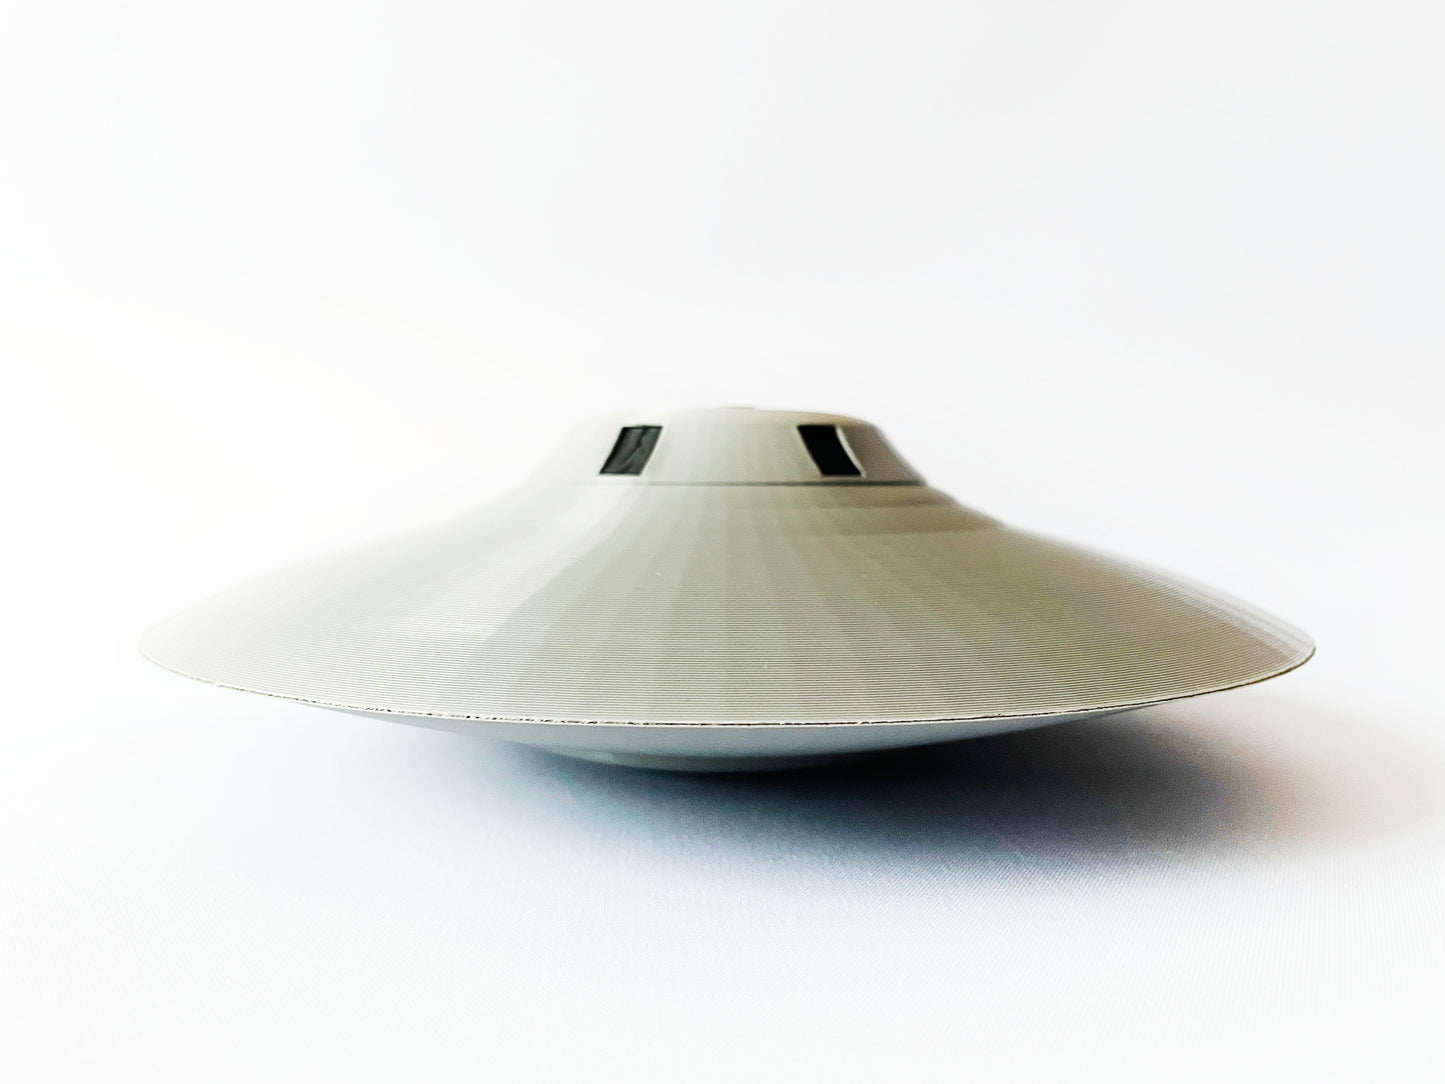 Bob Lazar UFO Model Area 51 - 20cm Diameter - 3D Printed